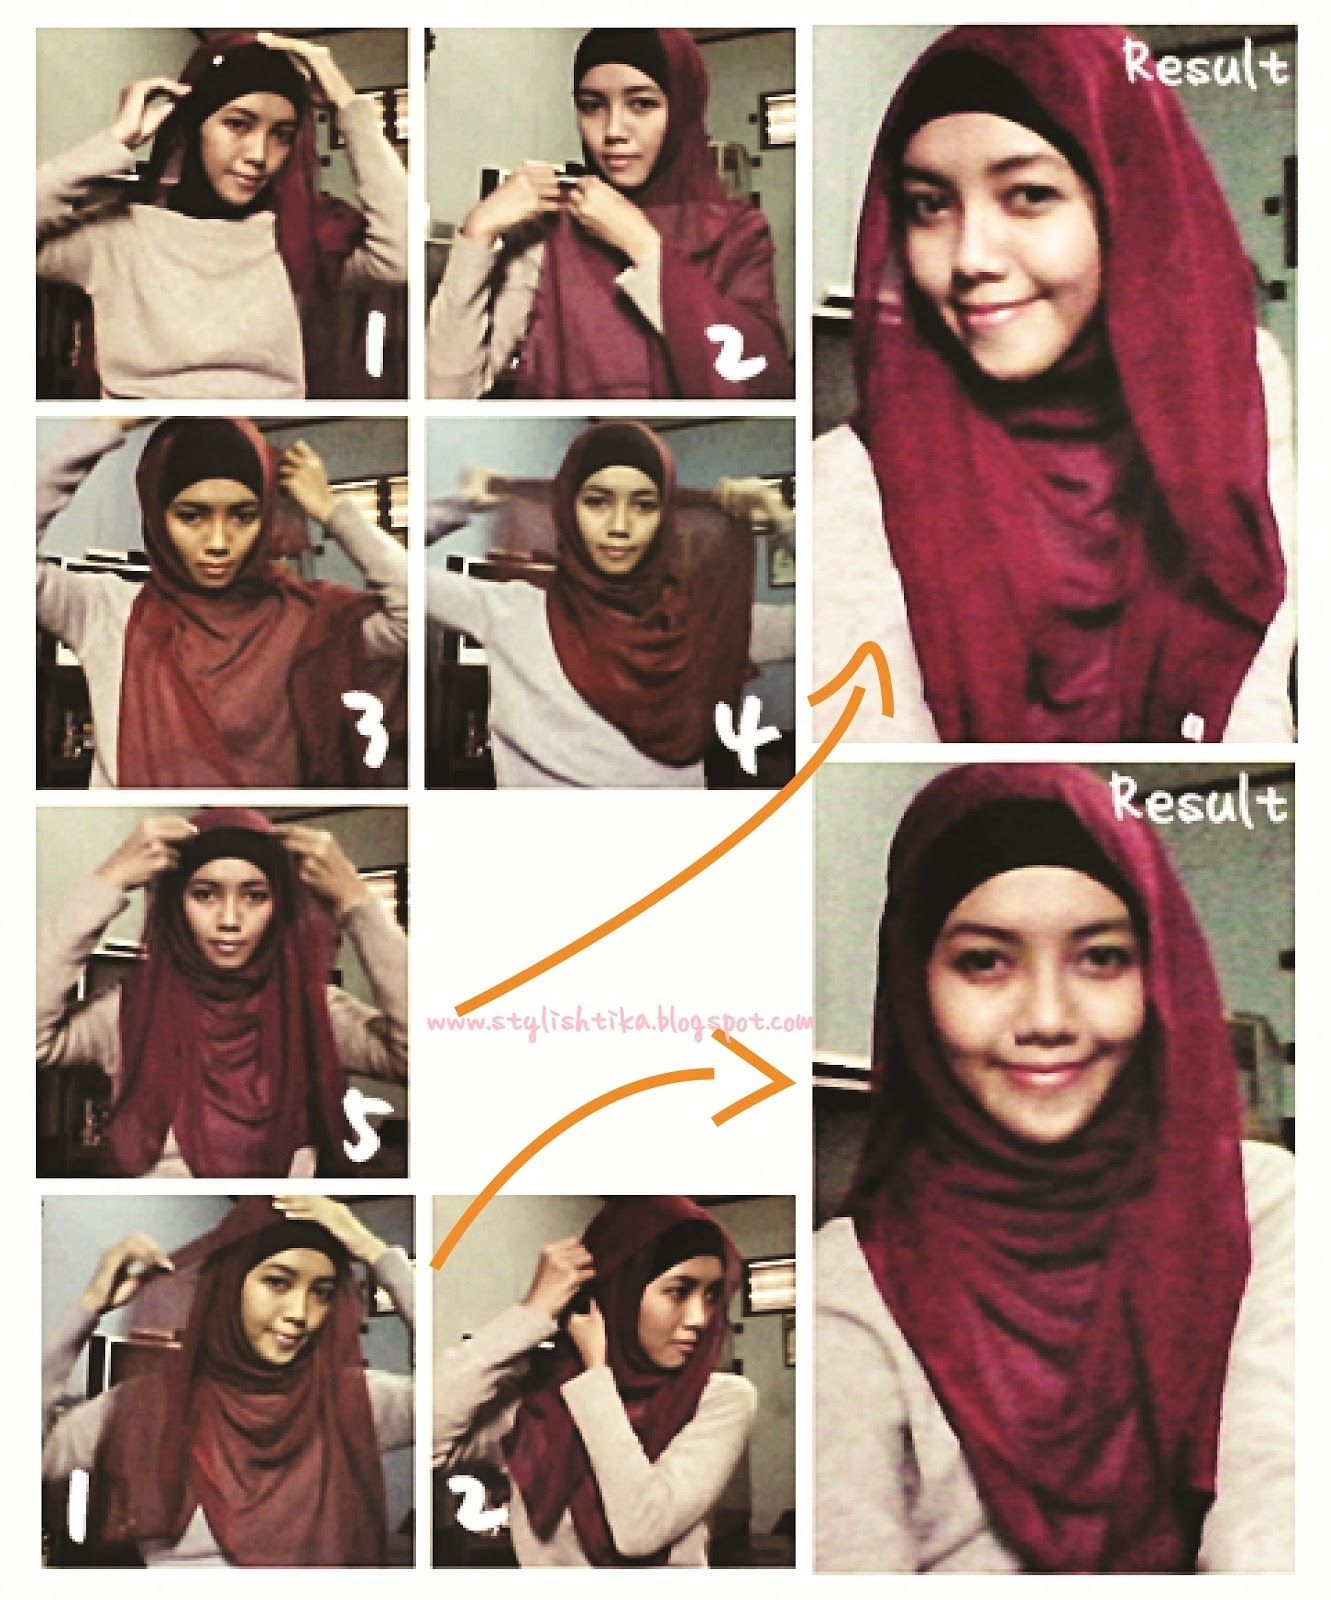 Model Hijab Untuk Wajah Bulat - langkung.com